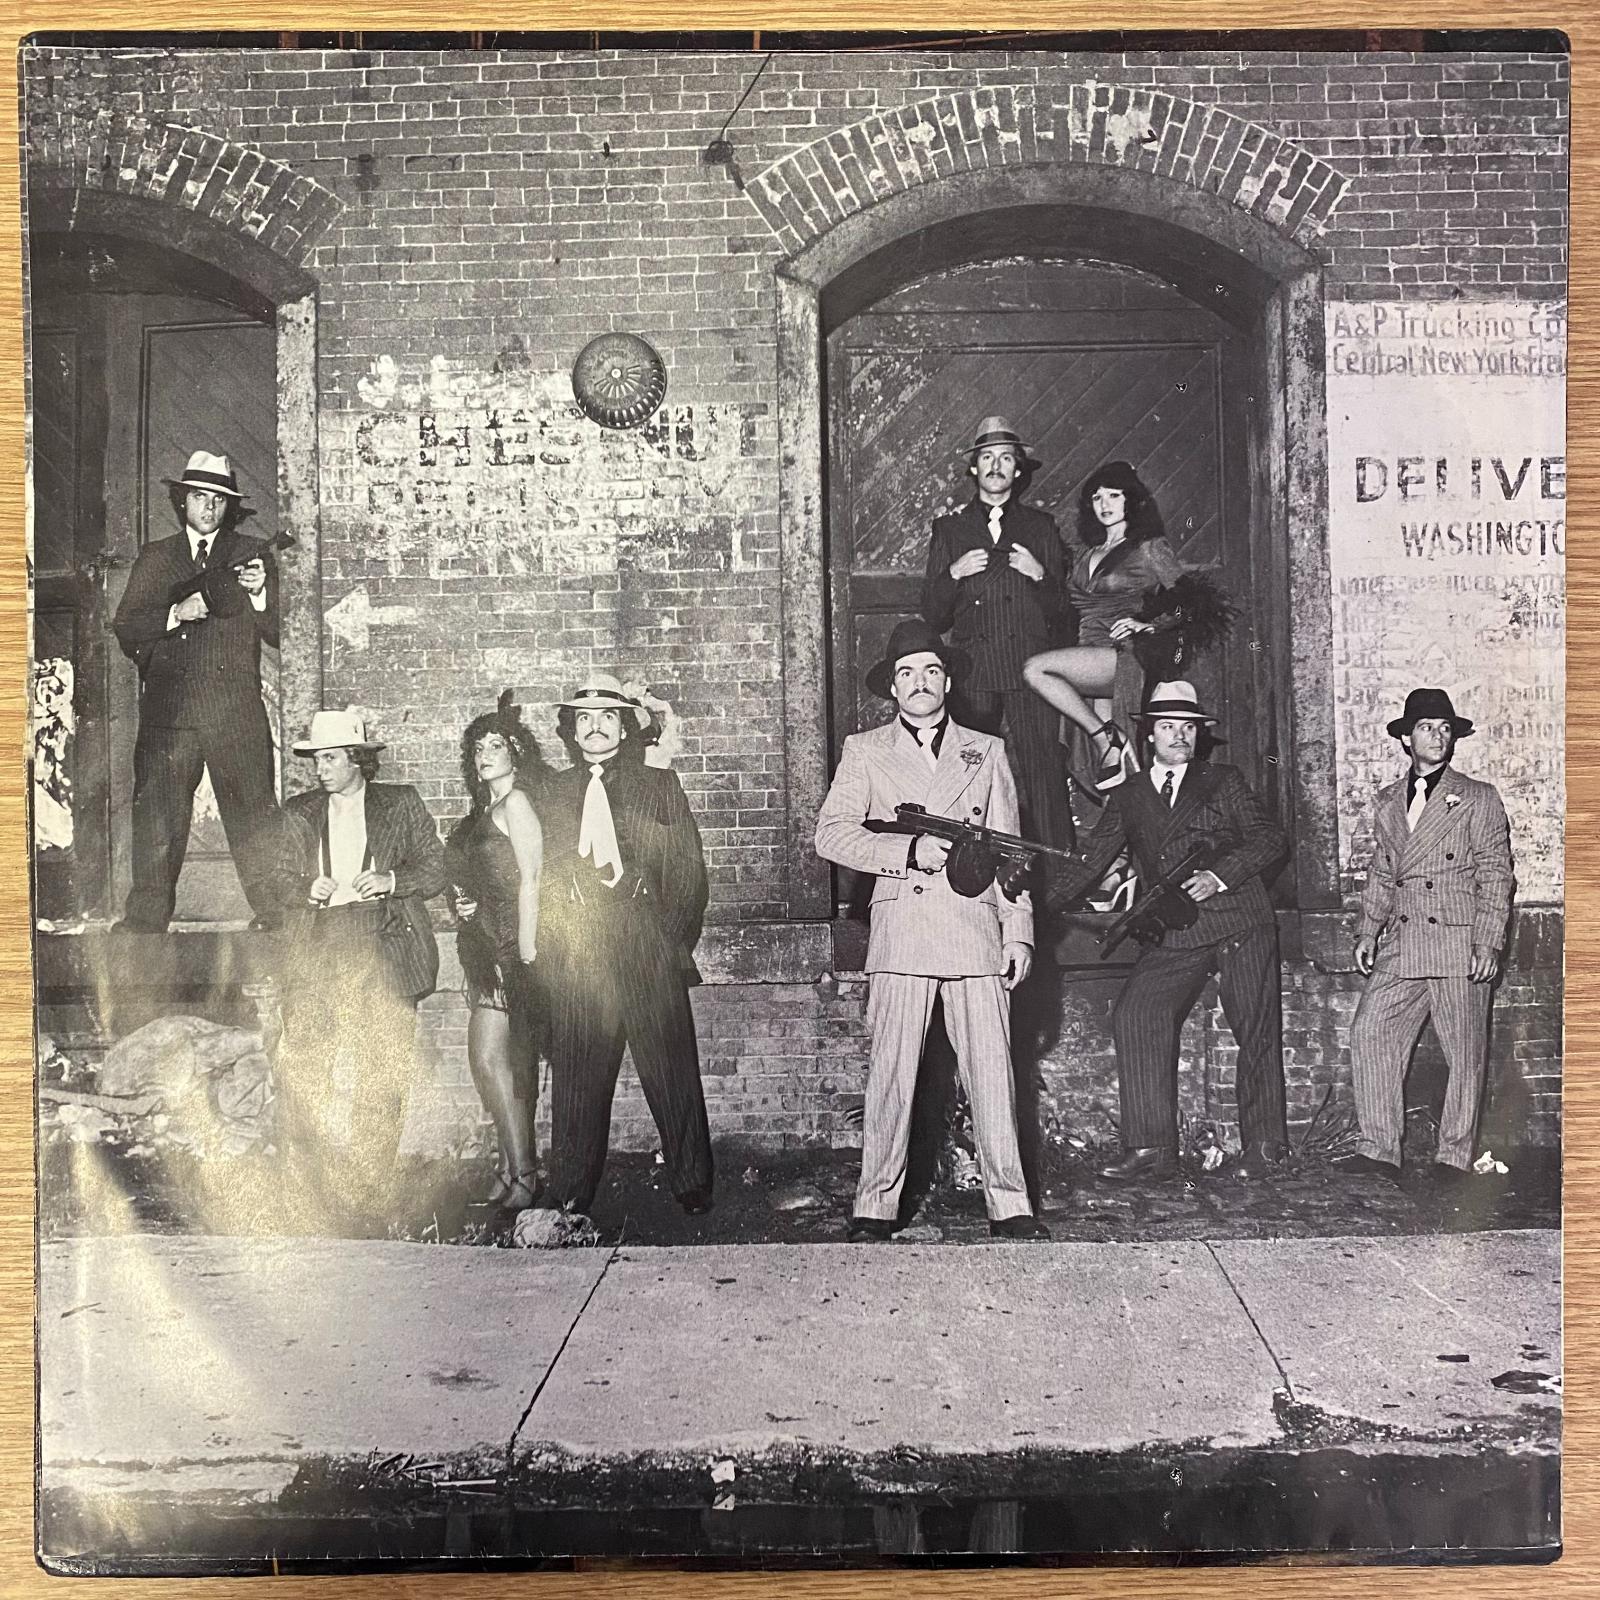 Gary's Gang – Gangbusters - LP / Vinylové desky